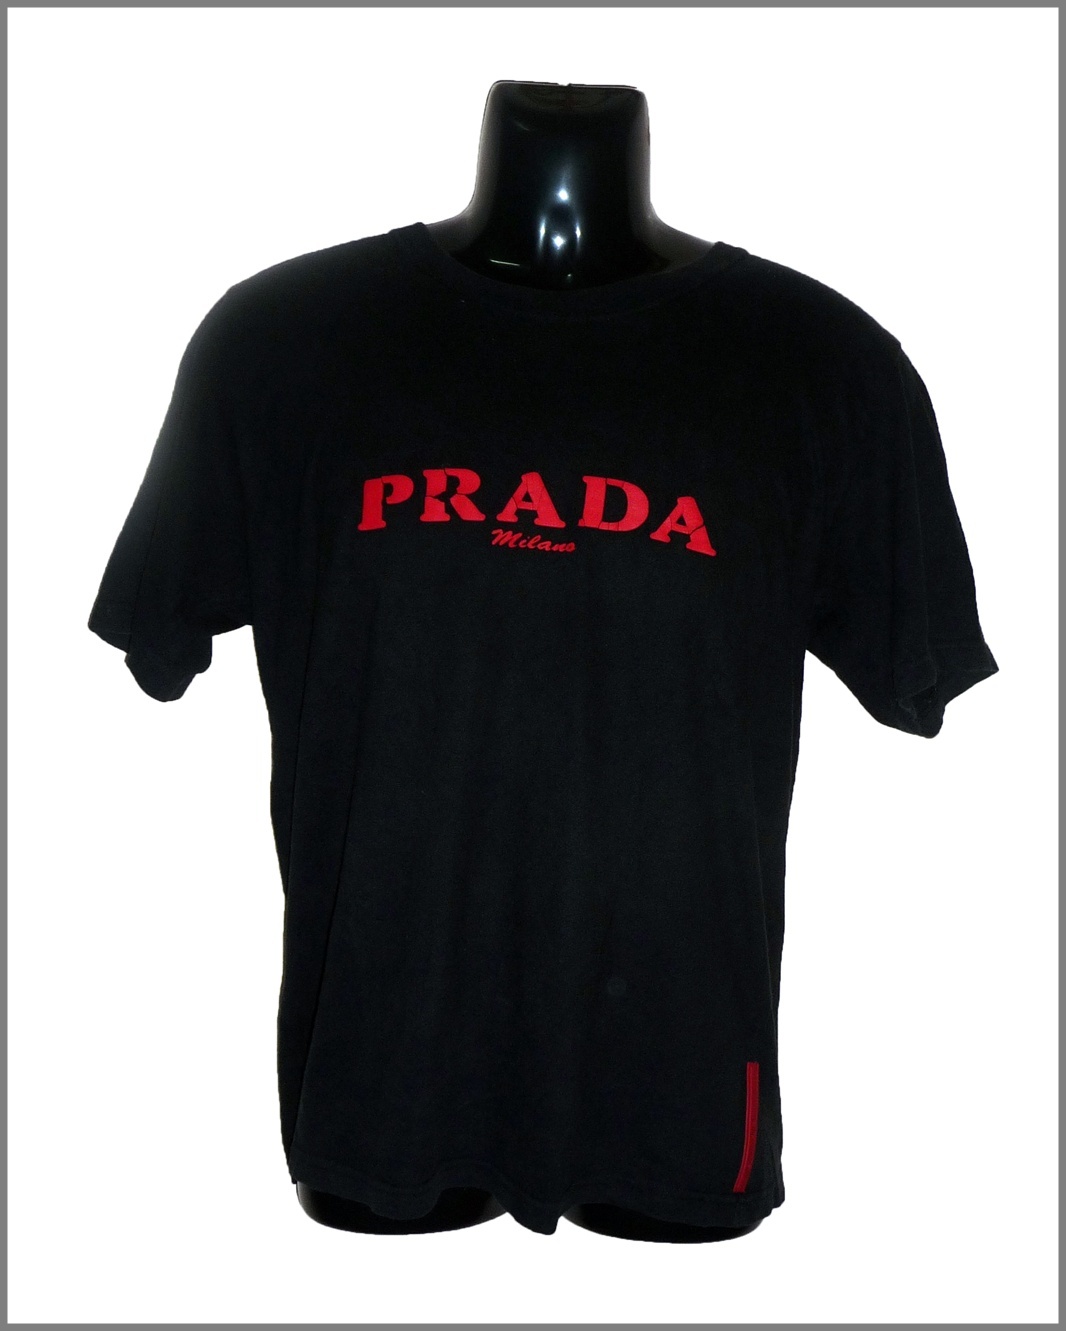 Dallek Shop - Bundle Online Shoping: T-Shirt Prada